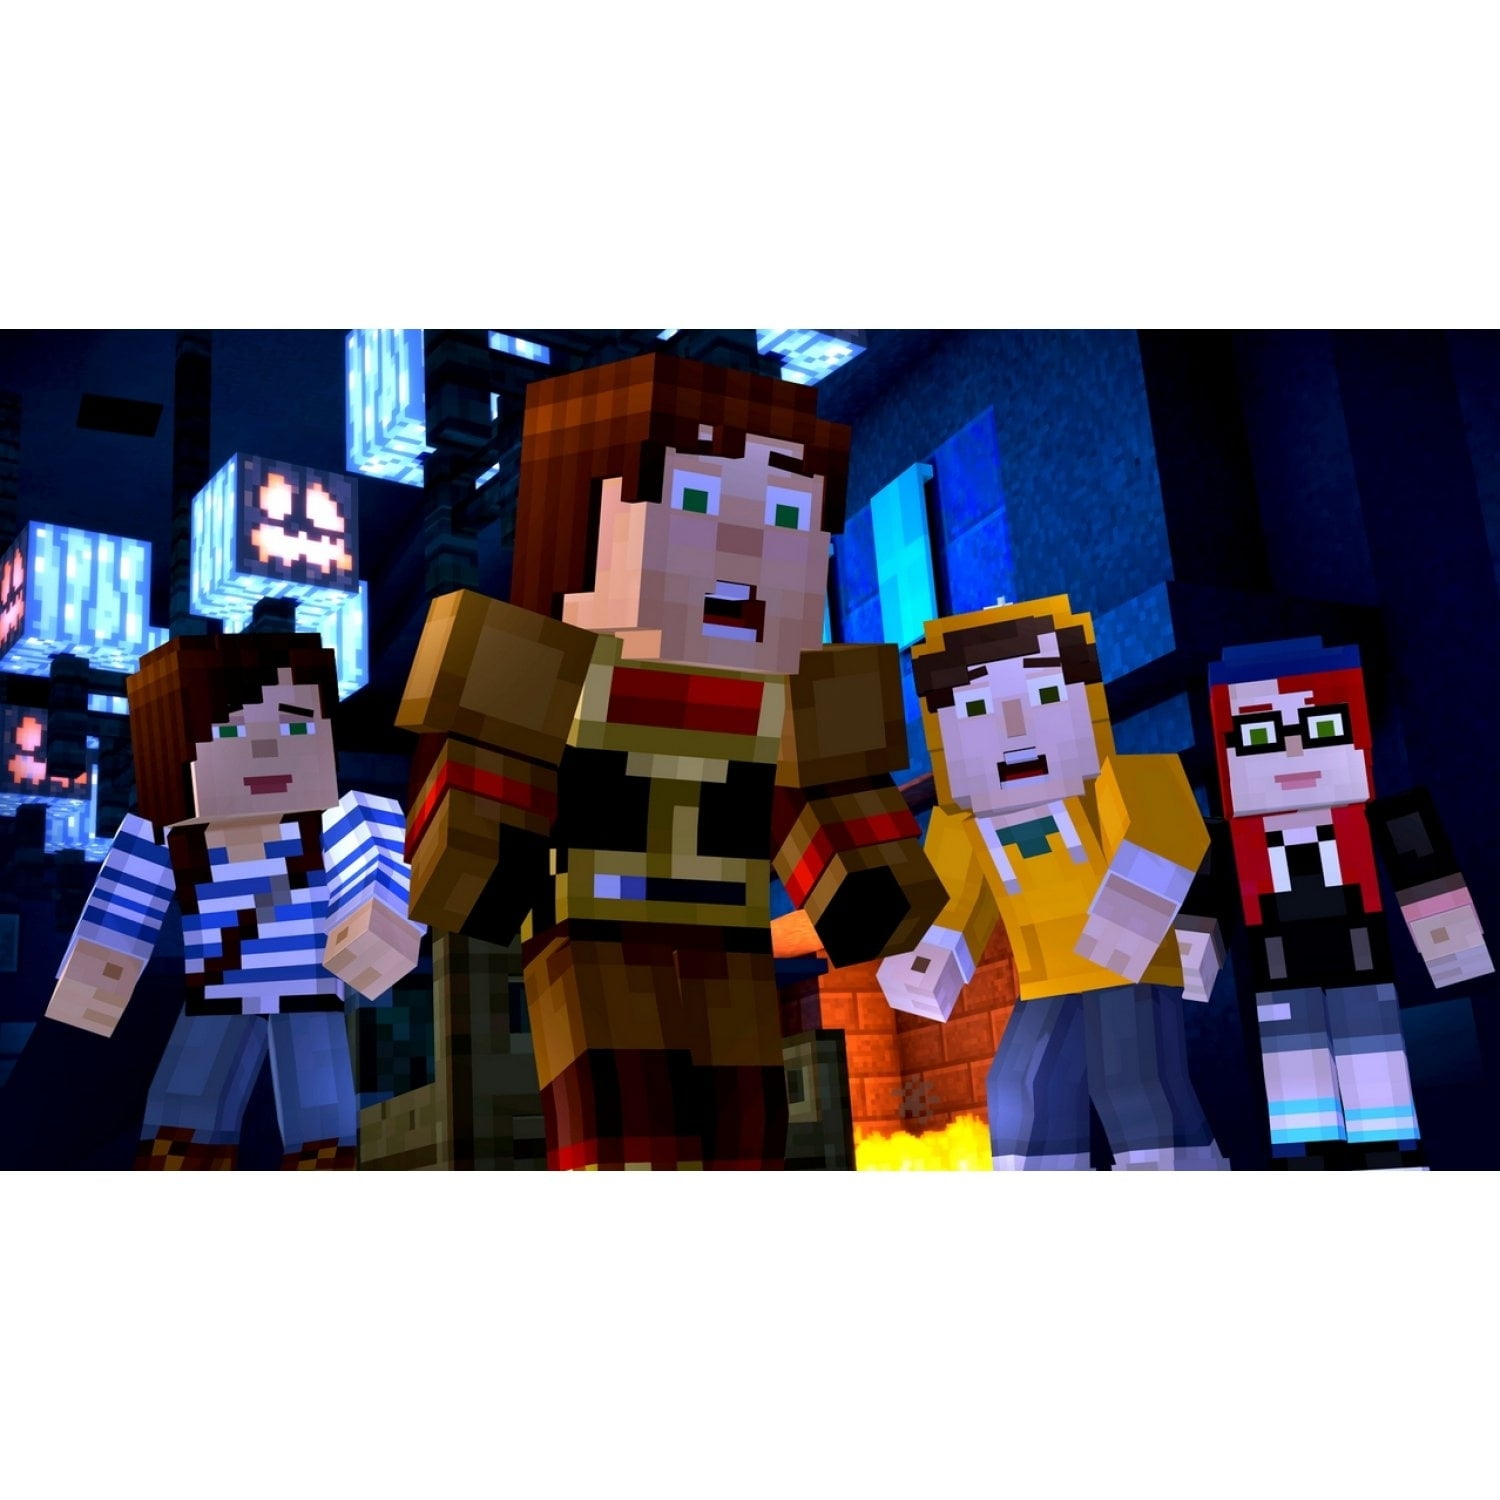 Jogo Minecraft story mode - Videogames - Itaum, Joinville 1256090102